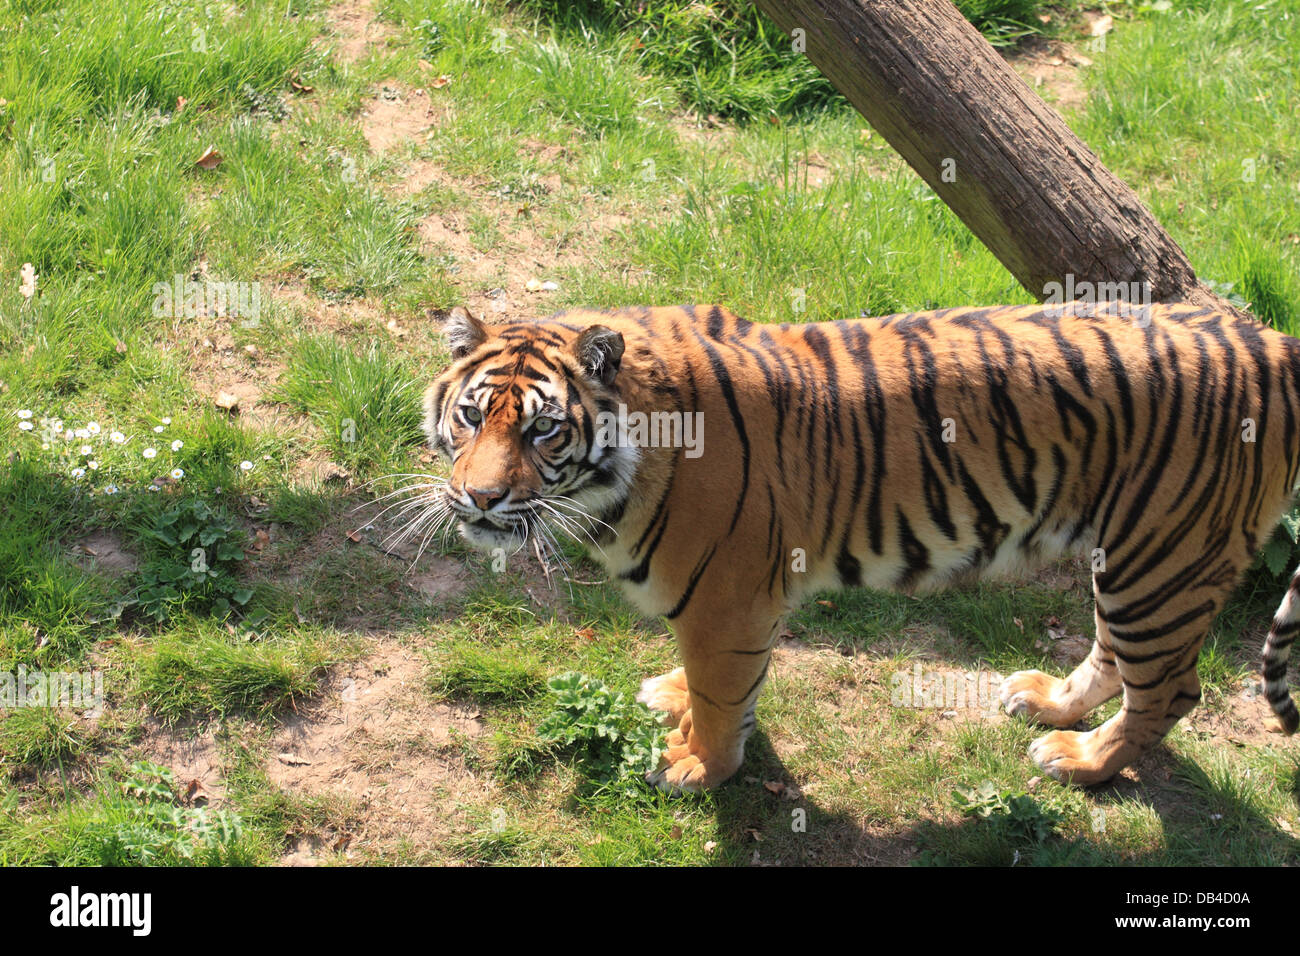 Big cat tiger, thrigby wildlife garden Stock Photo